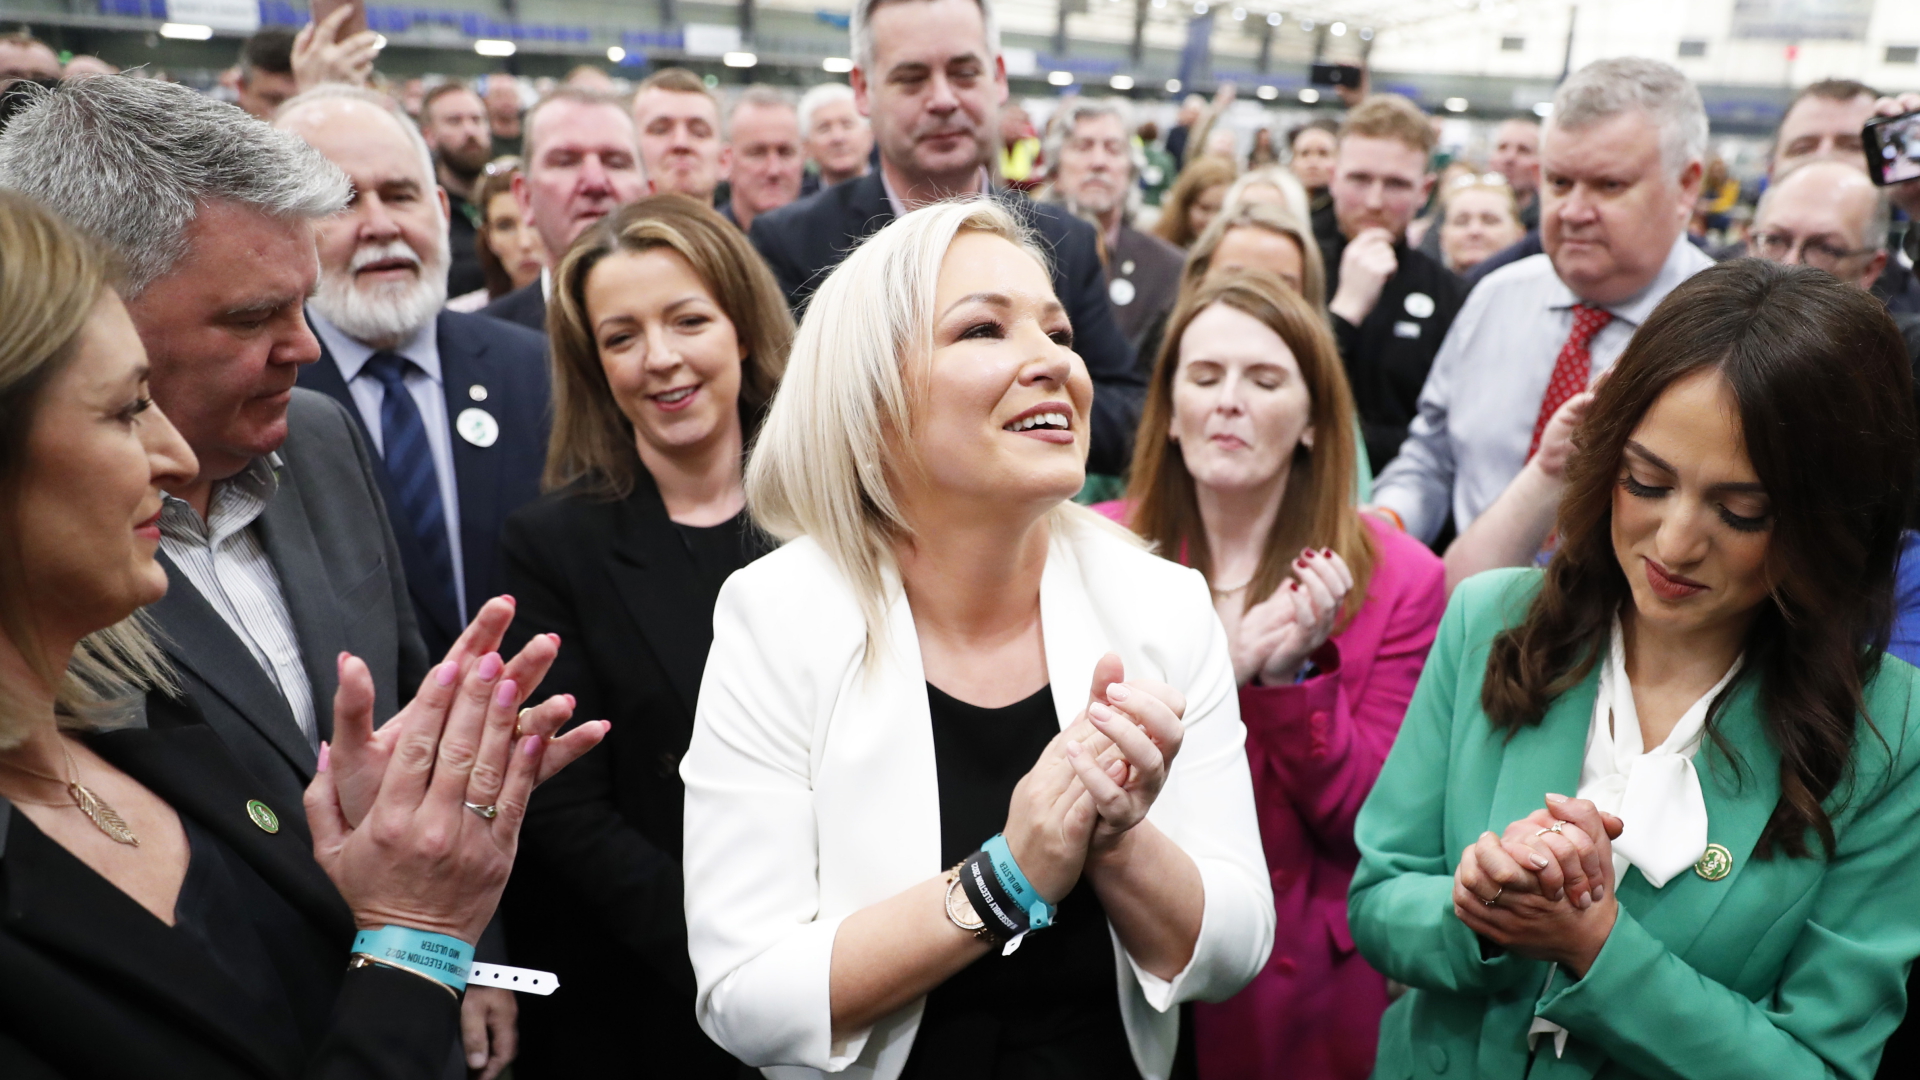 Northern Ireland: Sinn Fein leads in regional elections